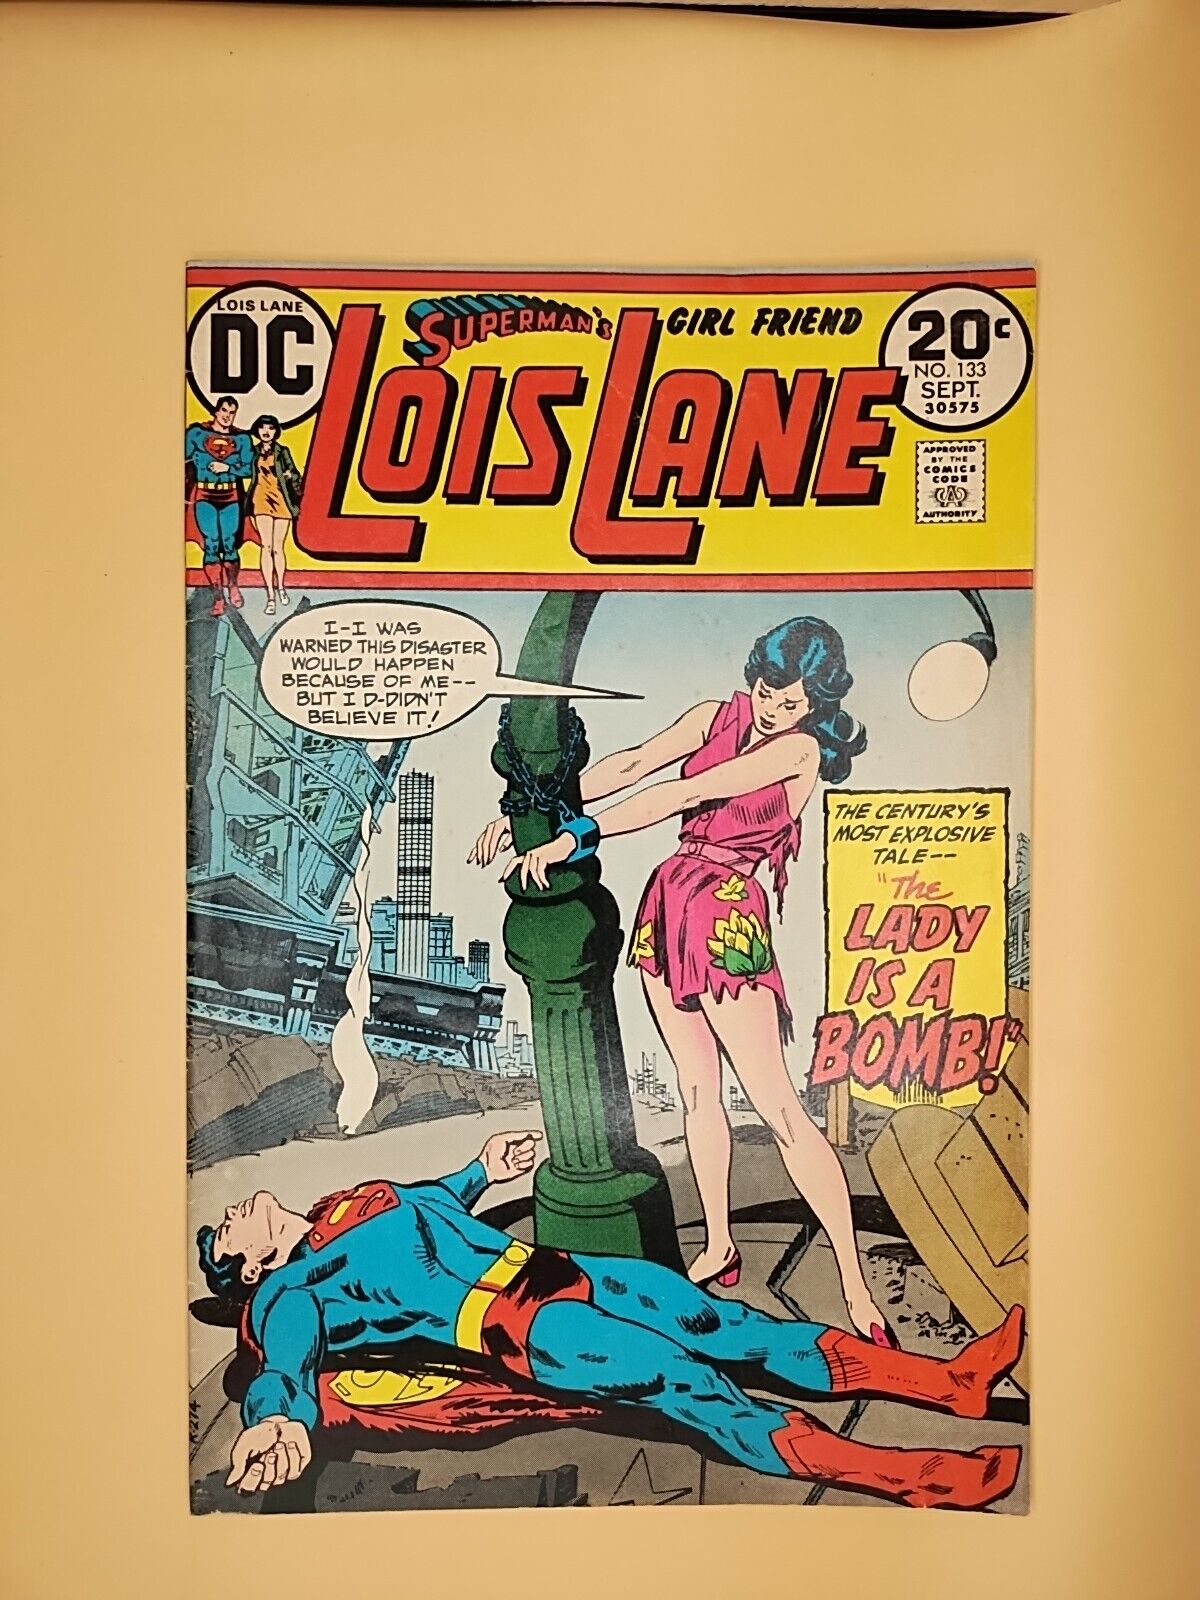 Superman\'s Girlfriend Lois Lane #133 Gorgeous Bright Glossy Bondage Cover